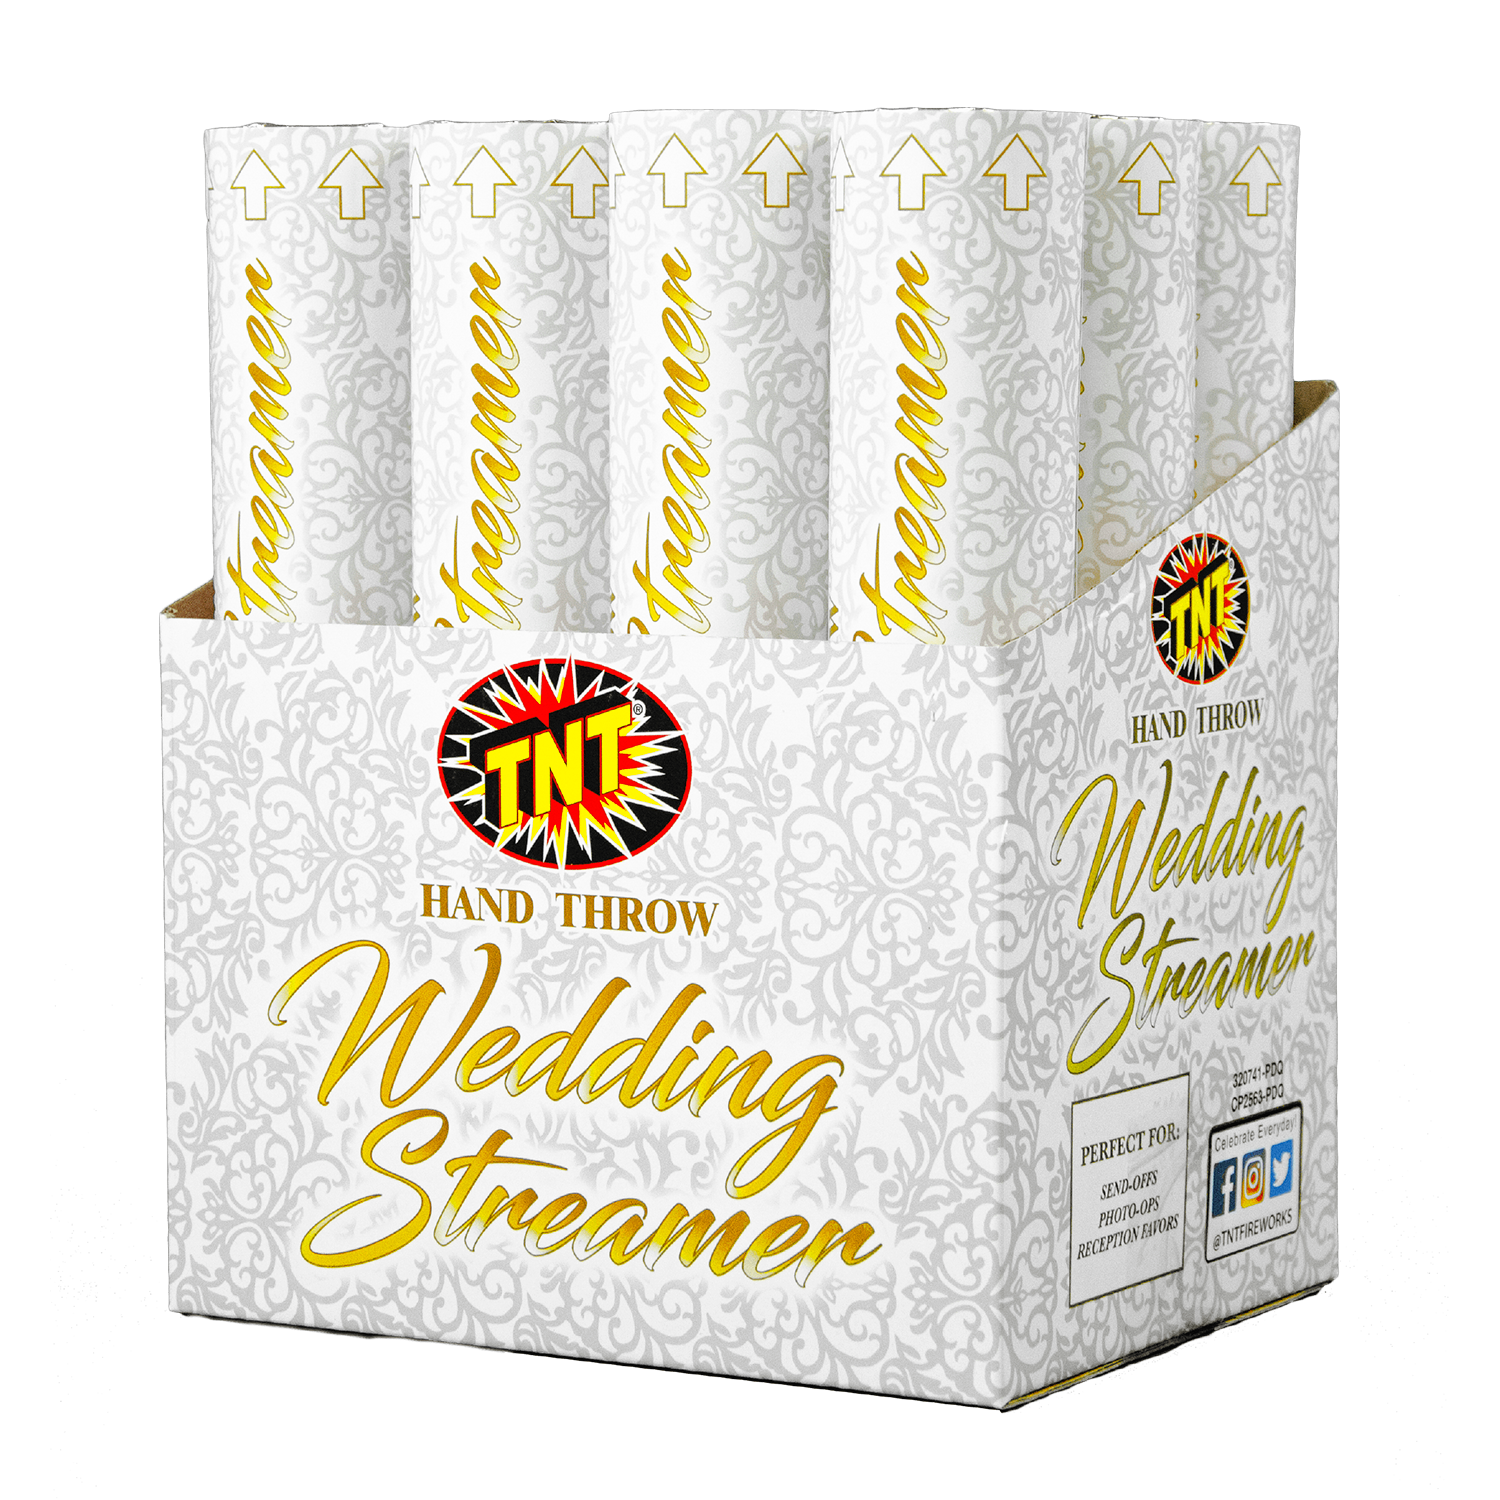 Hand Throw Confetti Streamers Wedding - www.celebrate.shop